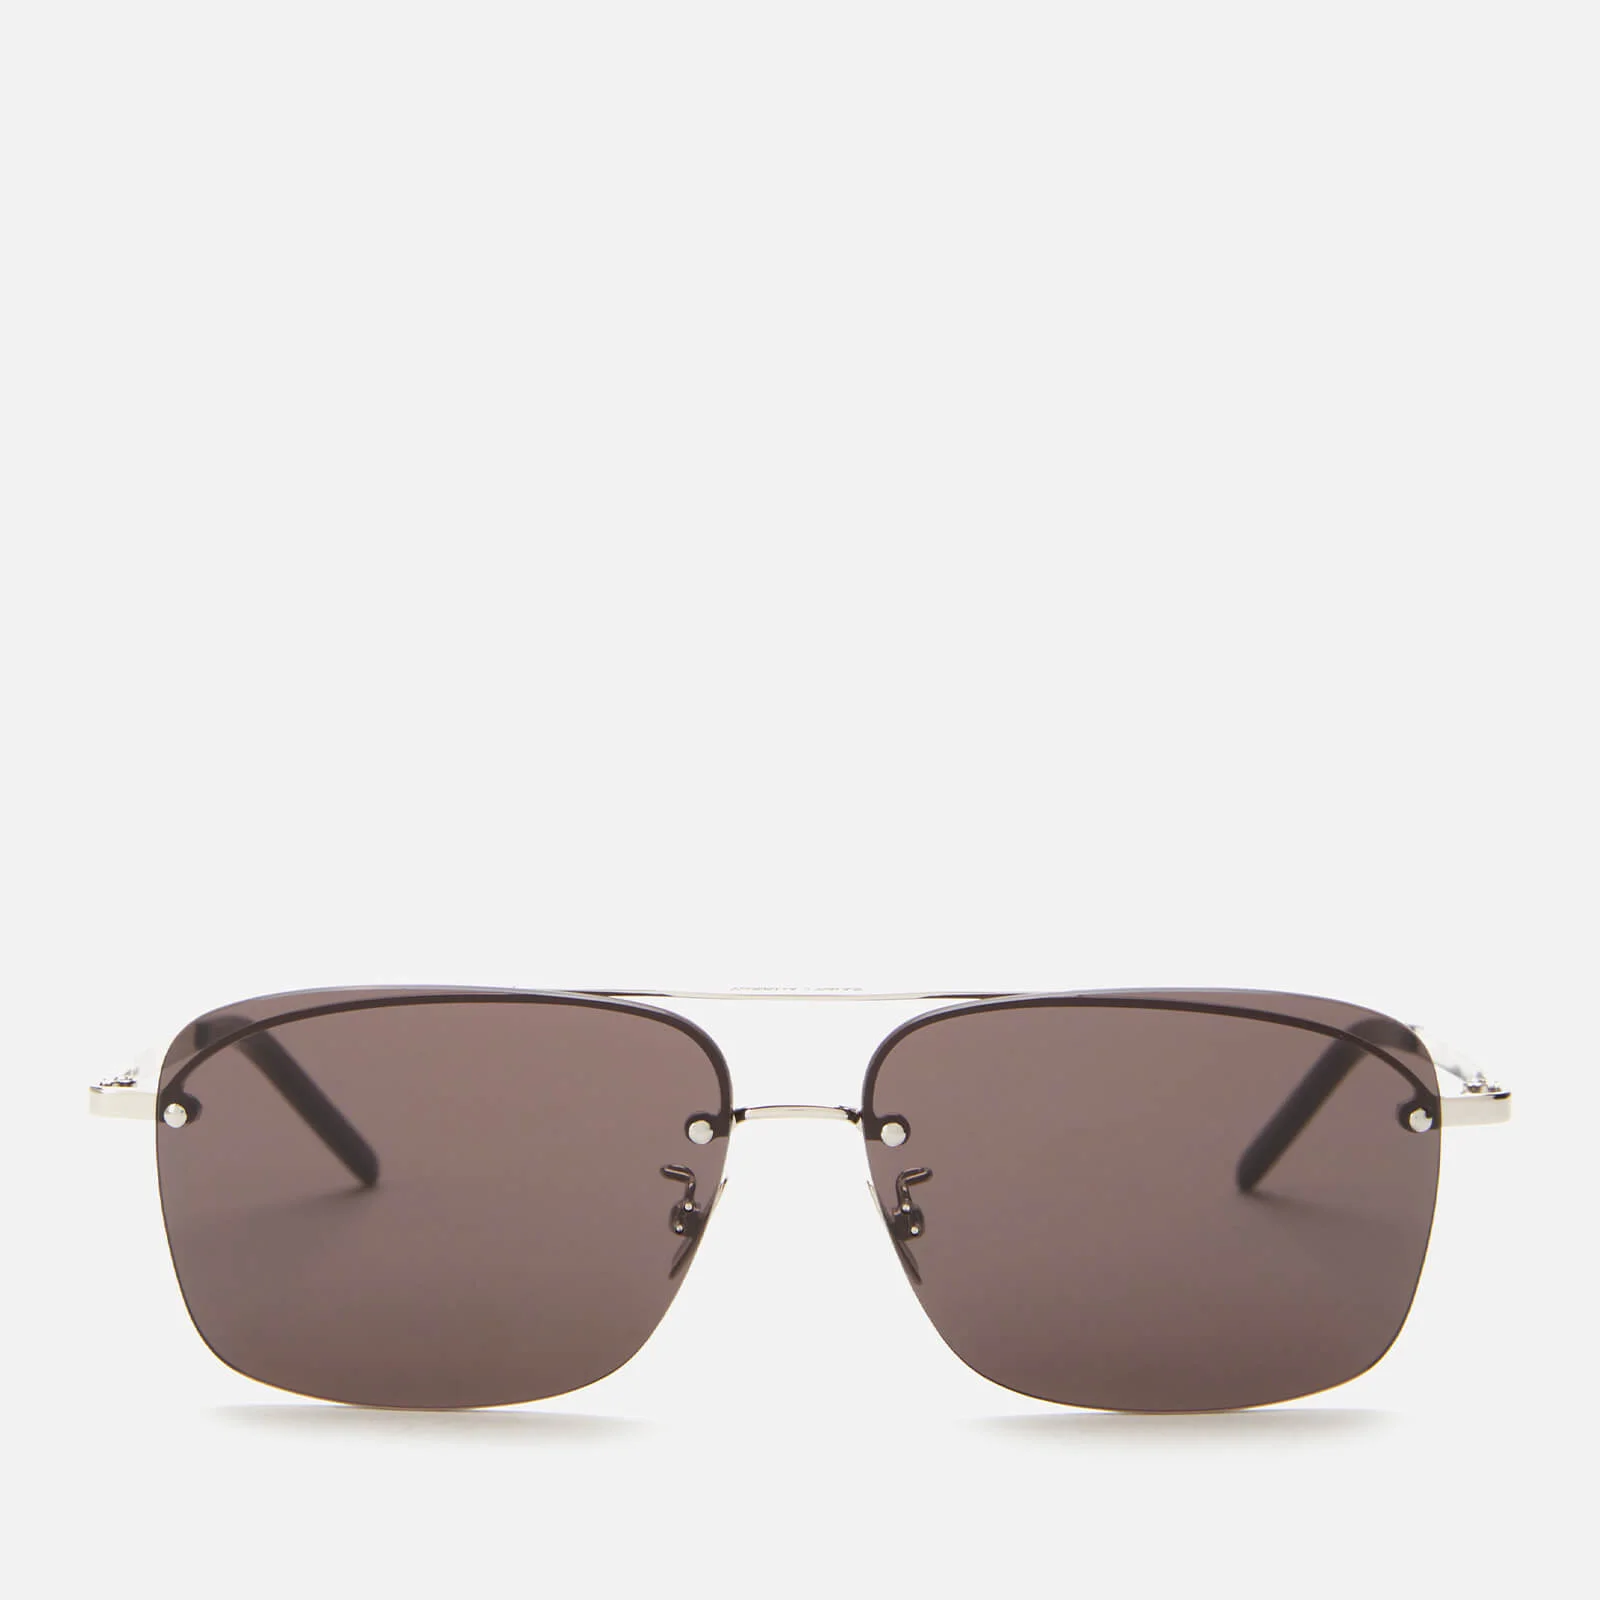 Saint Laurent Men's Sl 417 Metal Aviator Sunglasses - Silver/Black Image 1